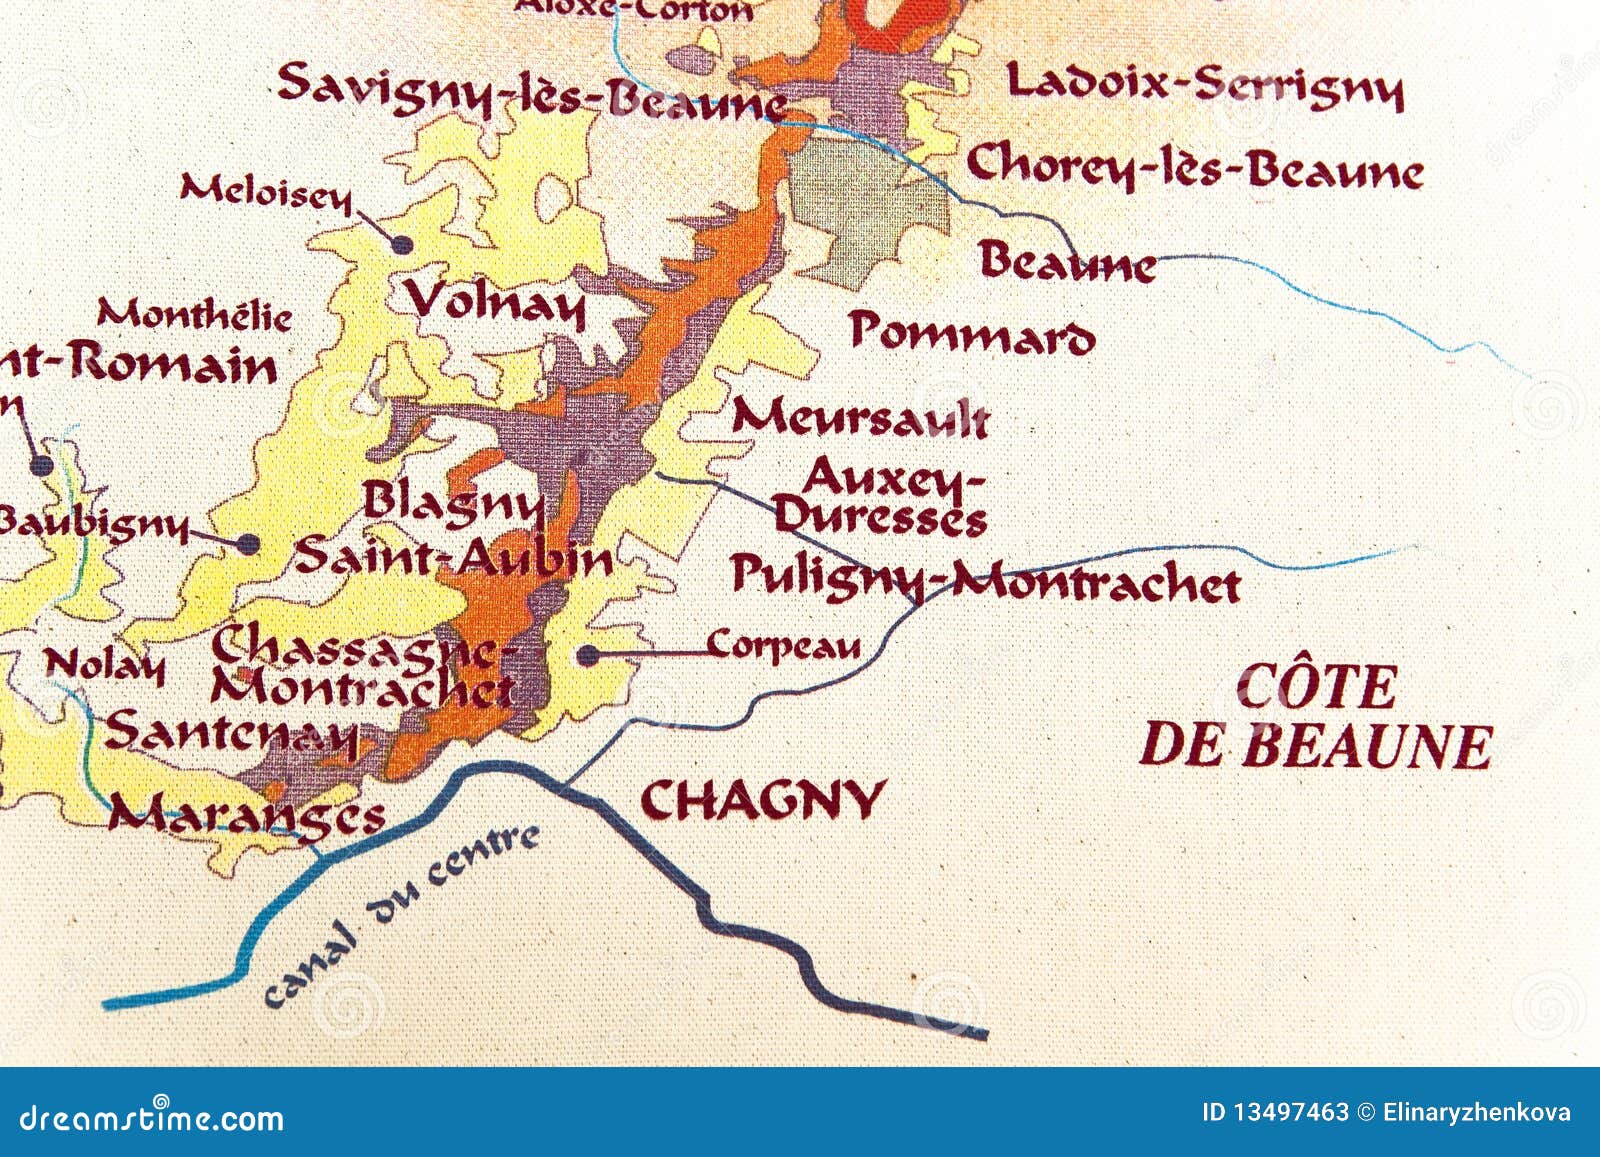 map of burgundy region